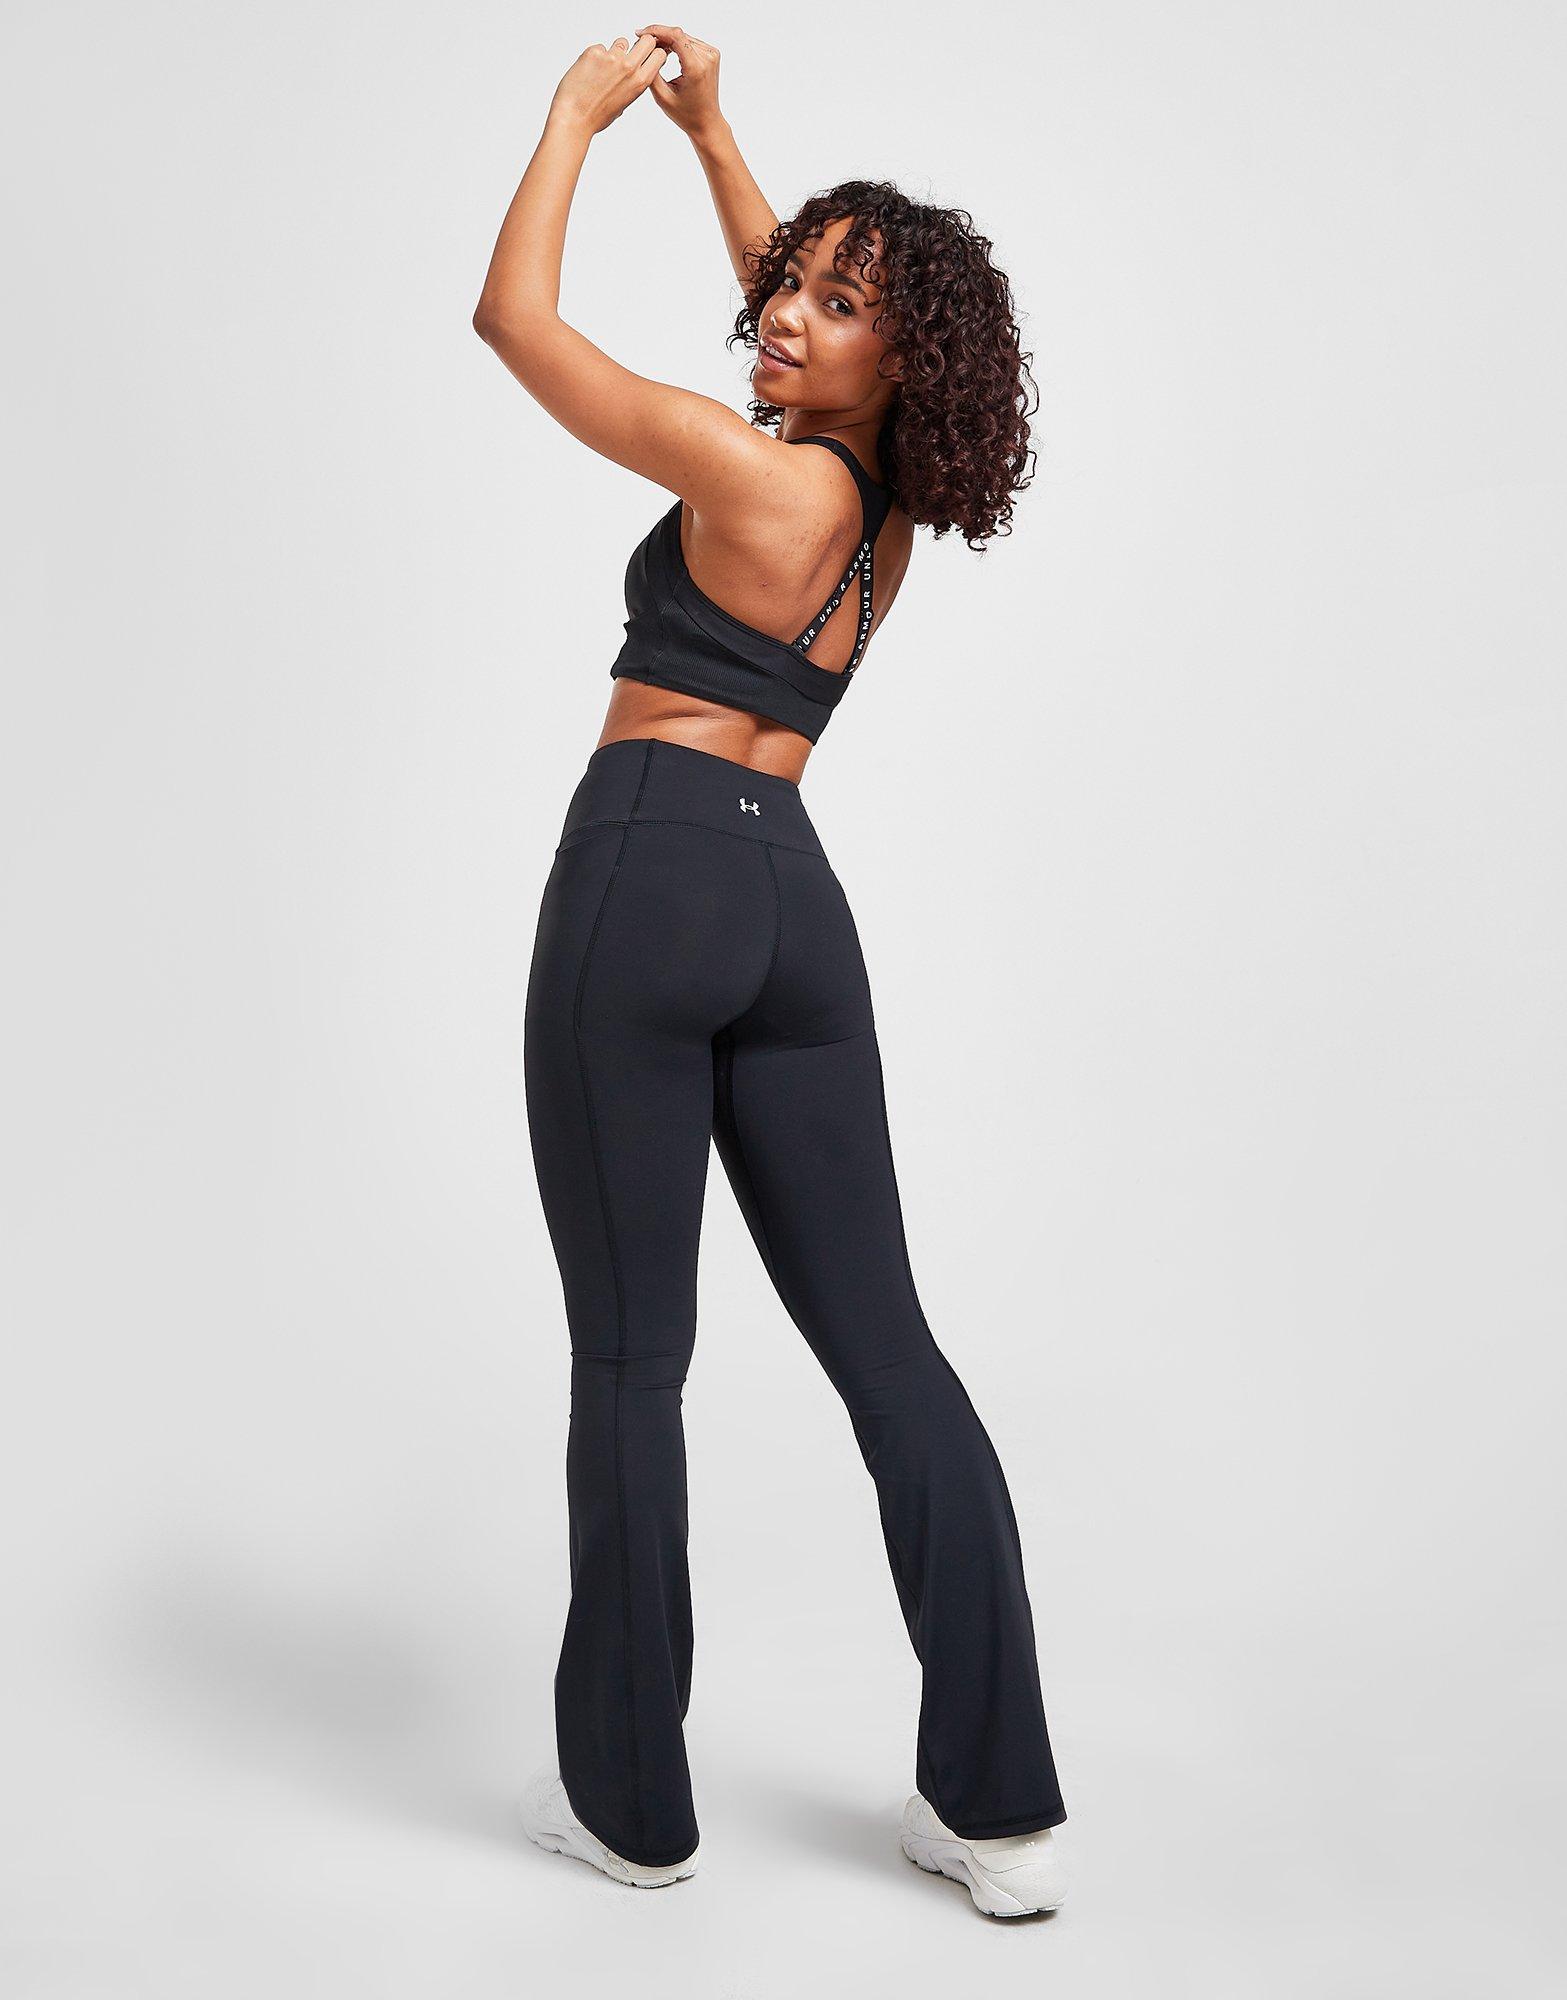 JWZUY Women's Black Flare Yoga Pants for Women, High Waisted Soft